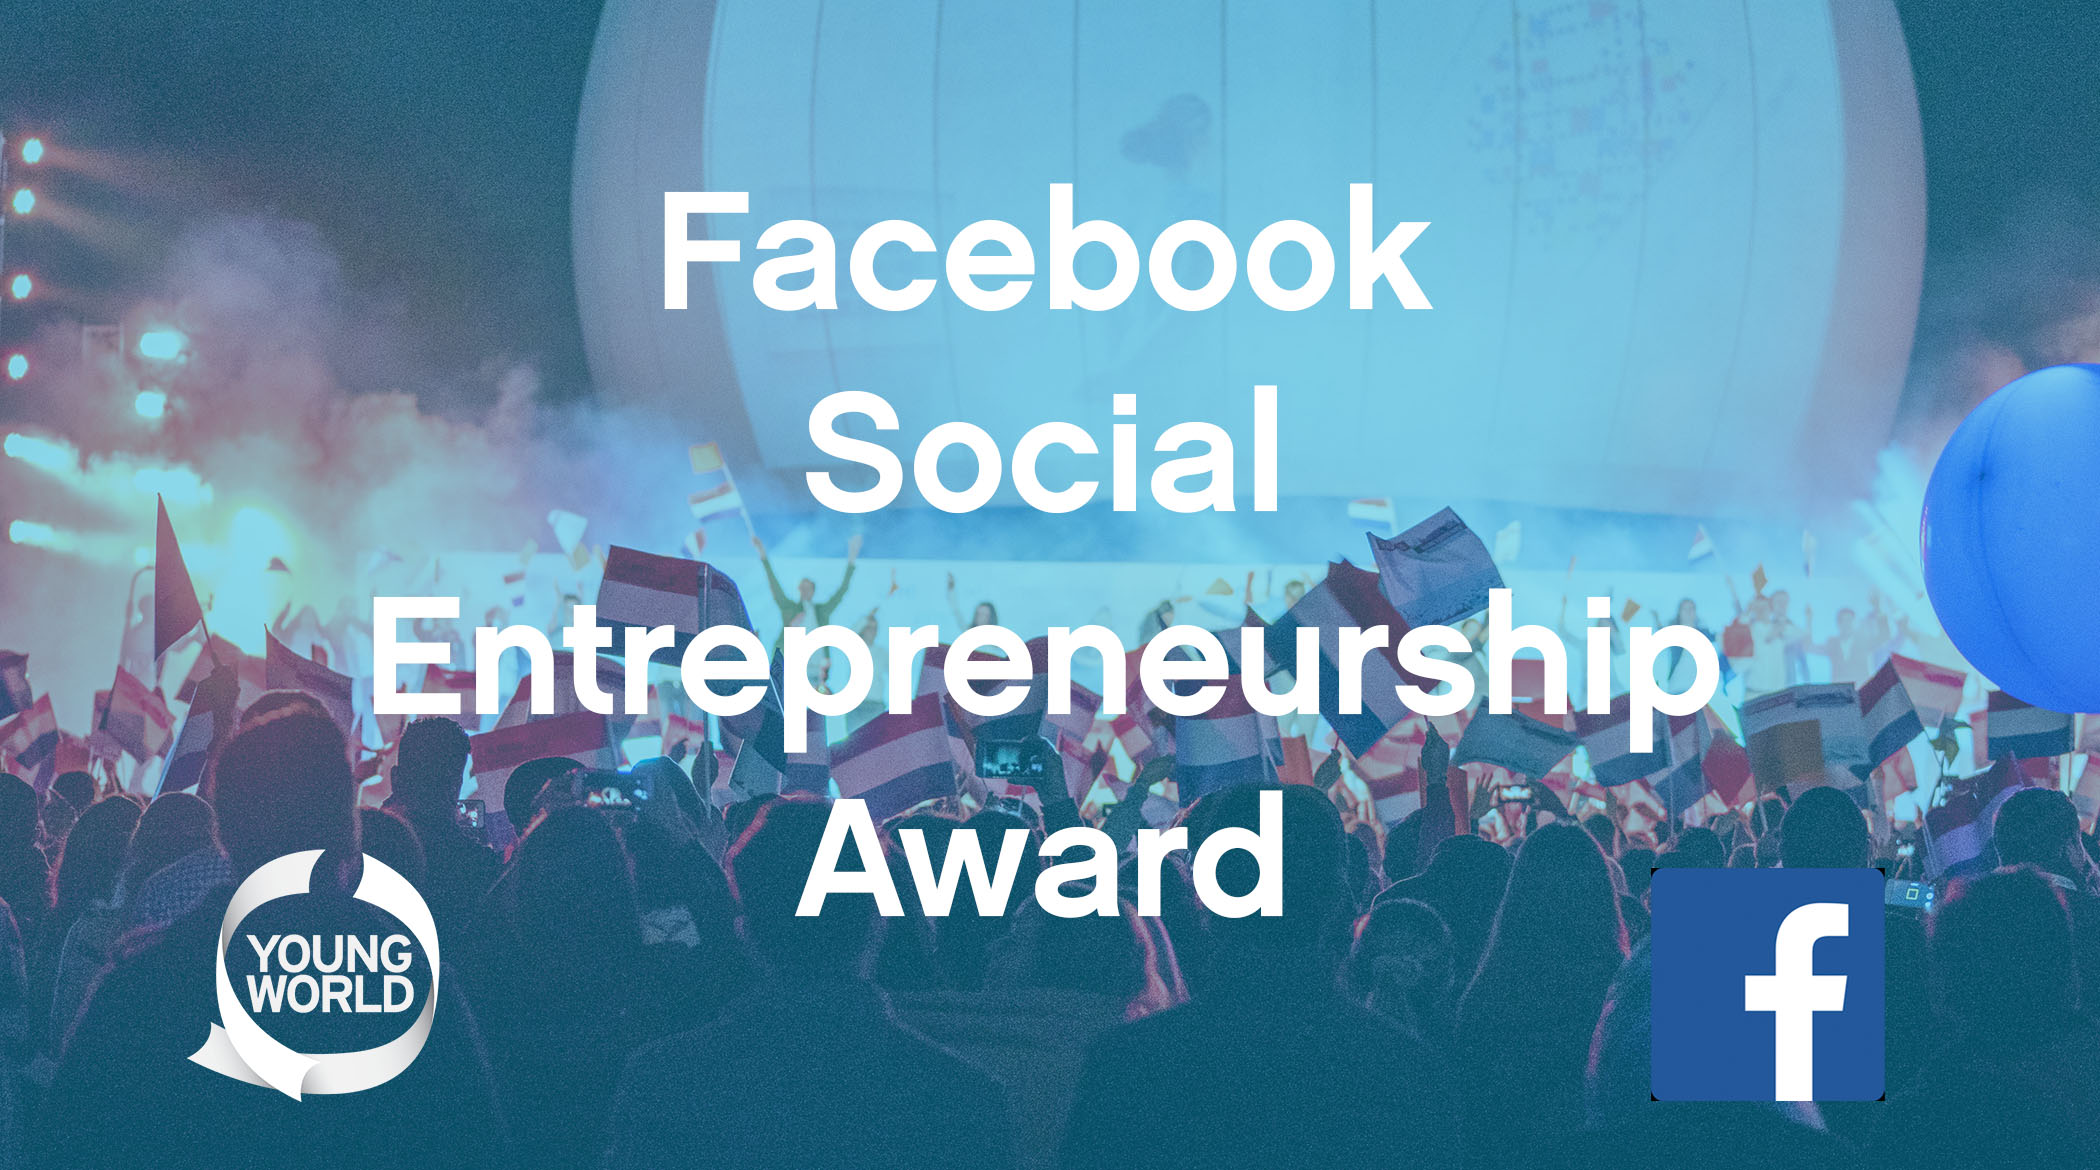 facebook social entrepreneurship award, facebook, social entrepreneurship, prize, award, mark zuckerberg, sheryl sandberg, funding, mentorship